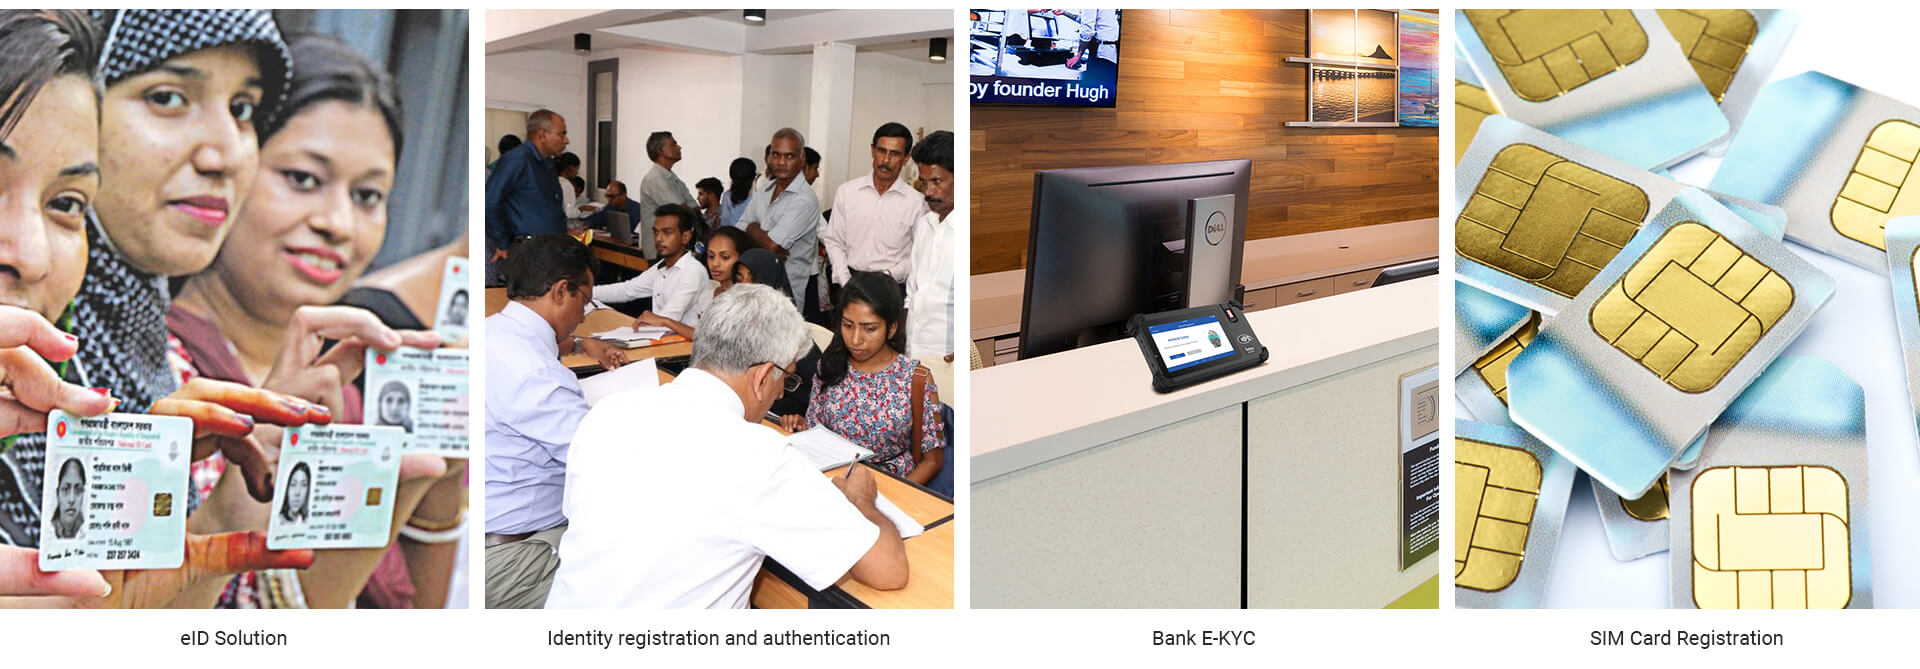 E-id Bank-KYC biometric tablet with fingerprinter